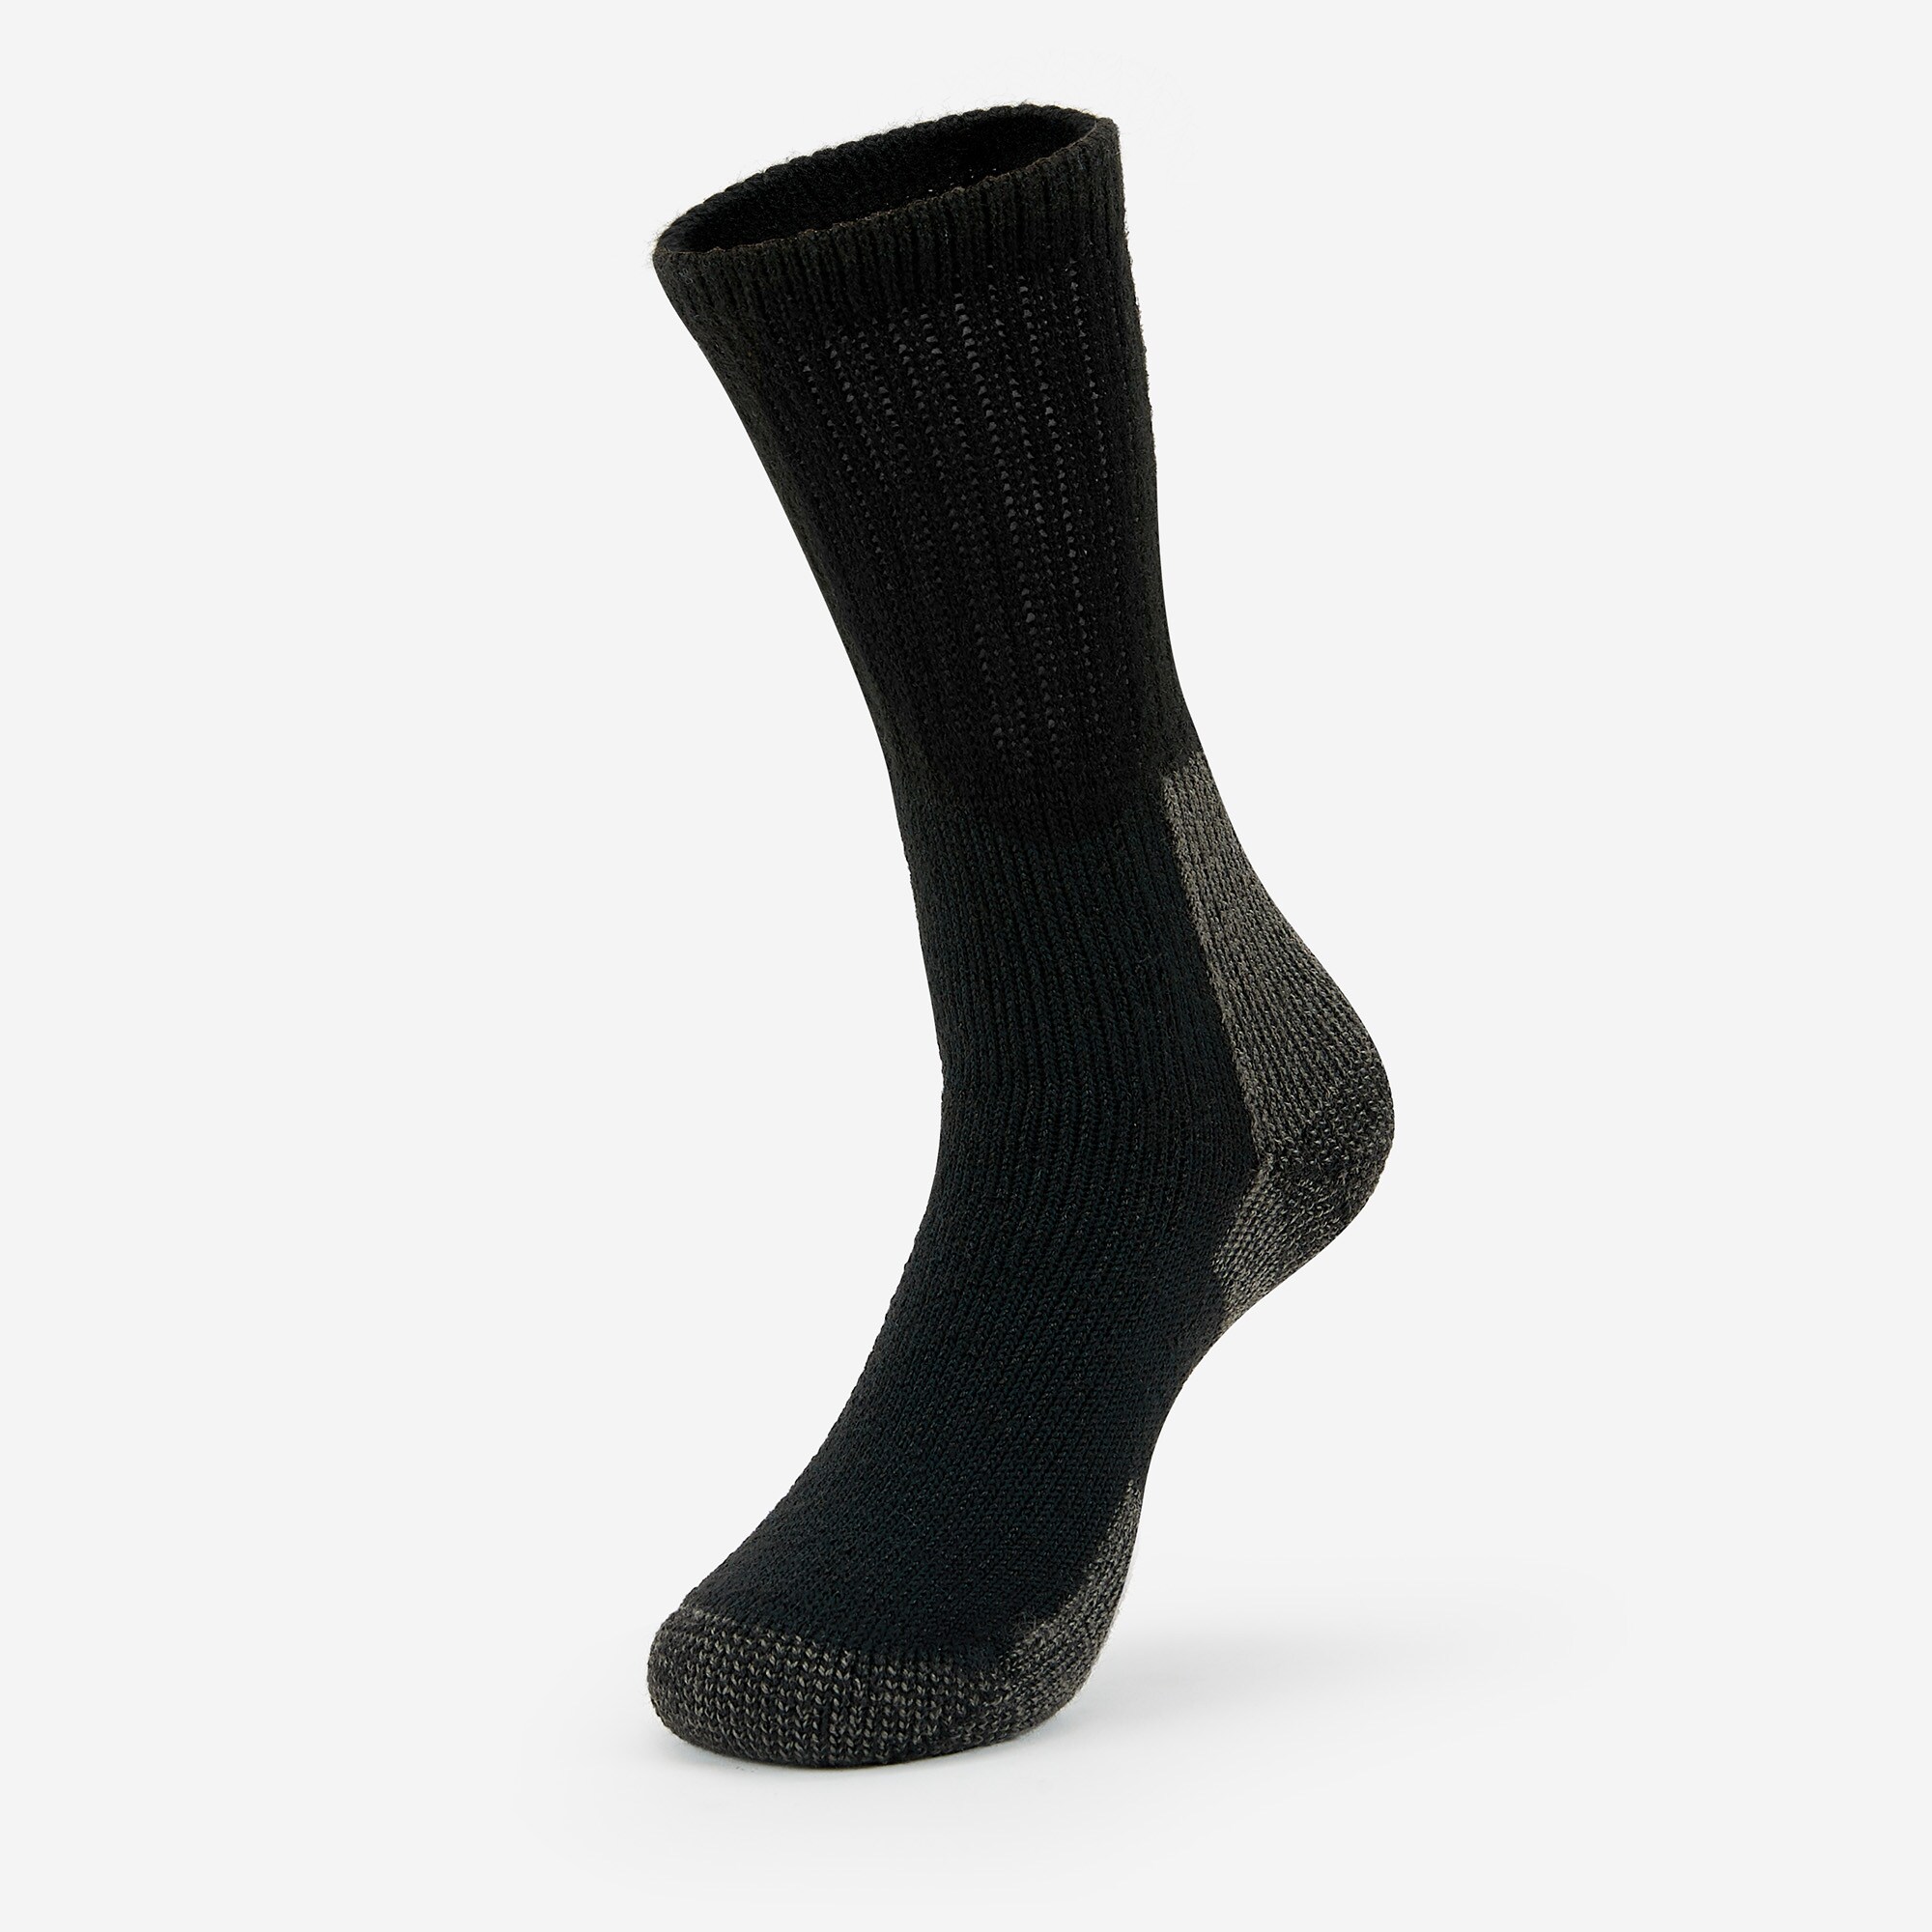 Thorlo Men's Acrylic Crew Socks at Lowes.com